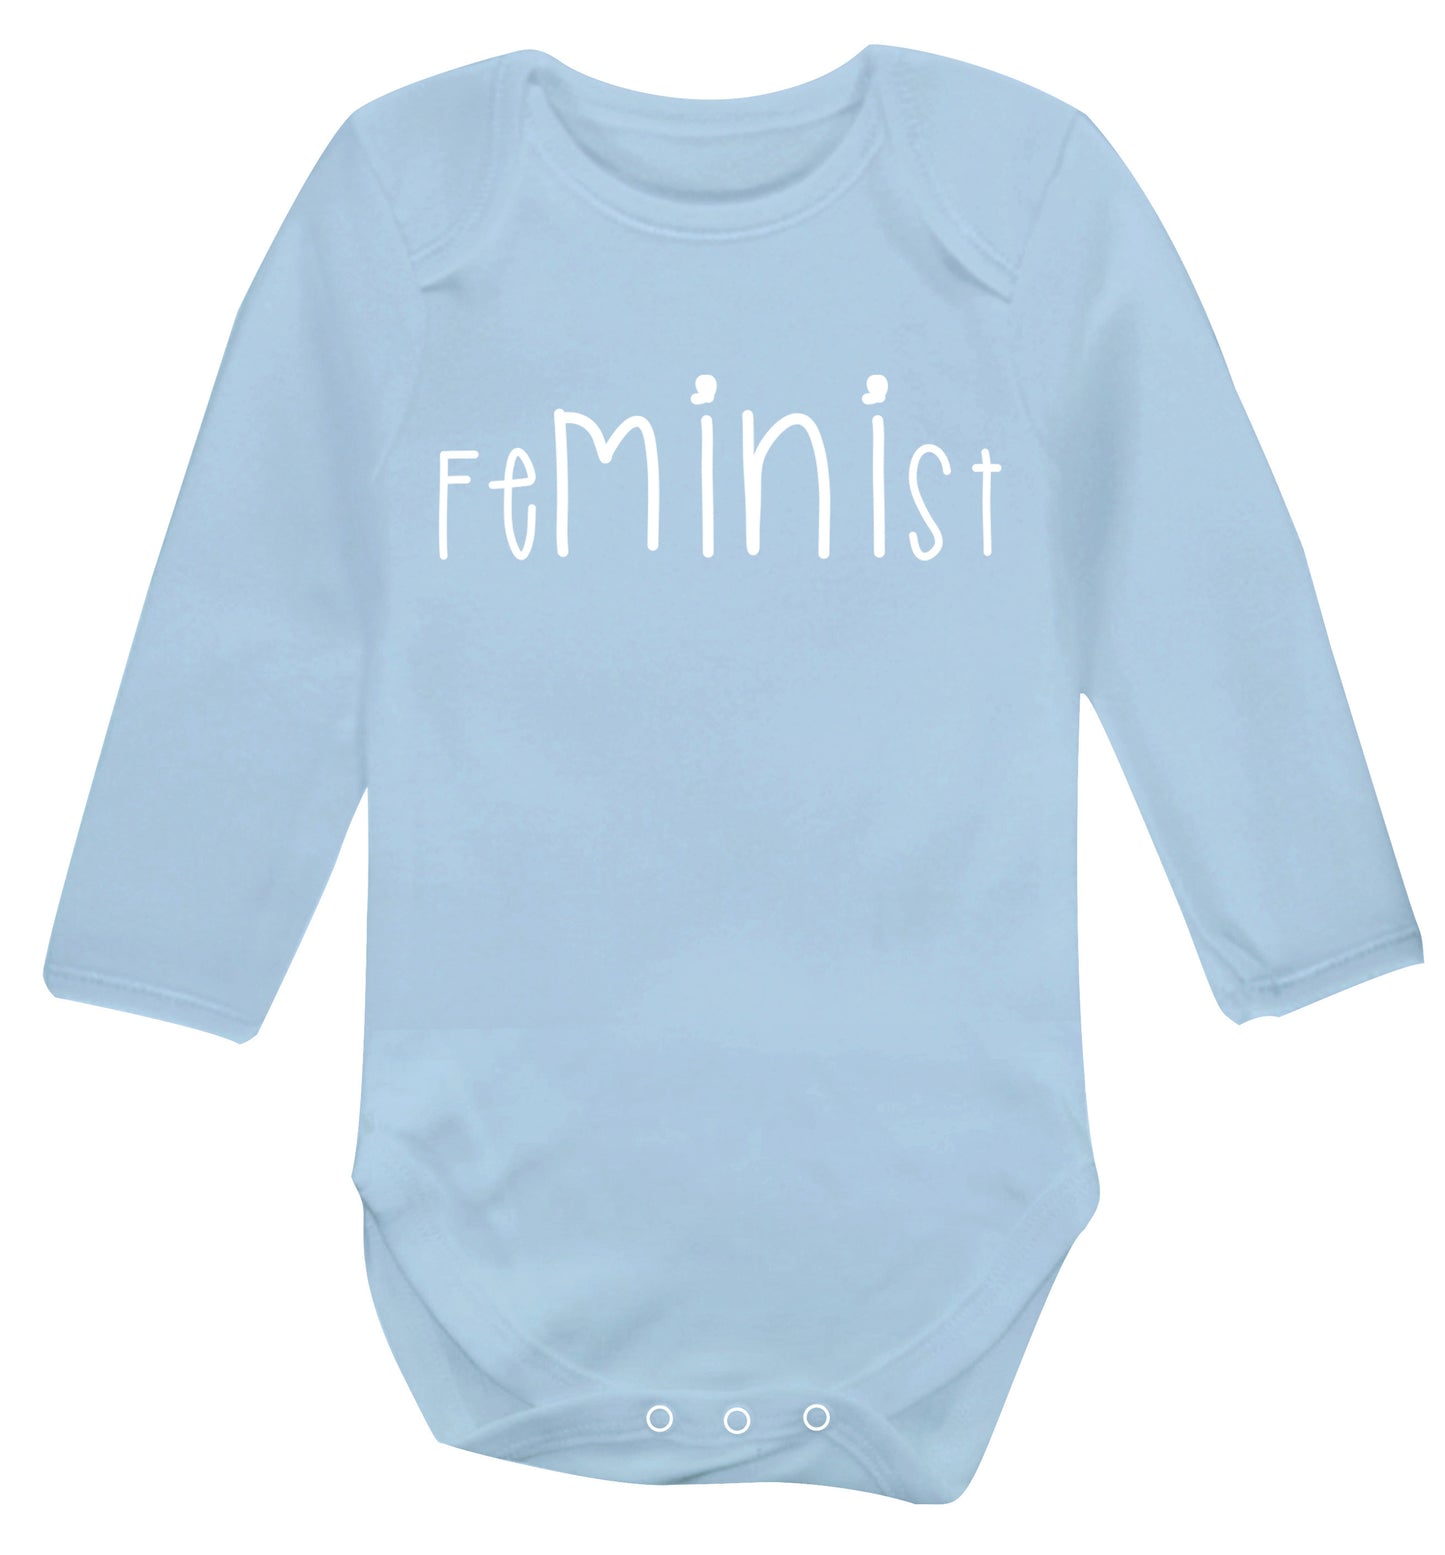 FeMINIst Baby Vest long sleeved pale blue 6-12 months